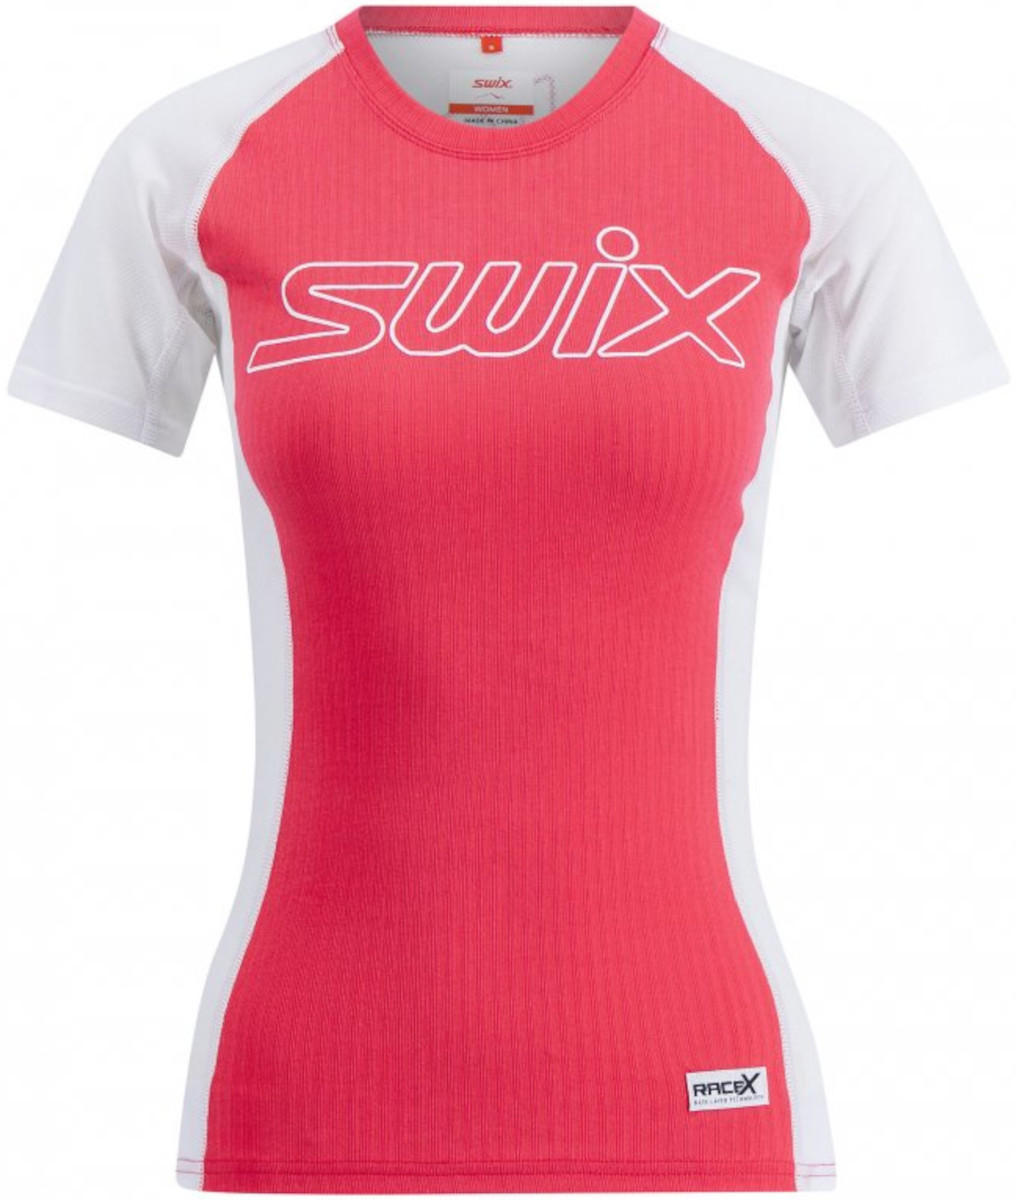 T-shirt SWIX RaceX light